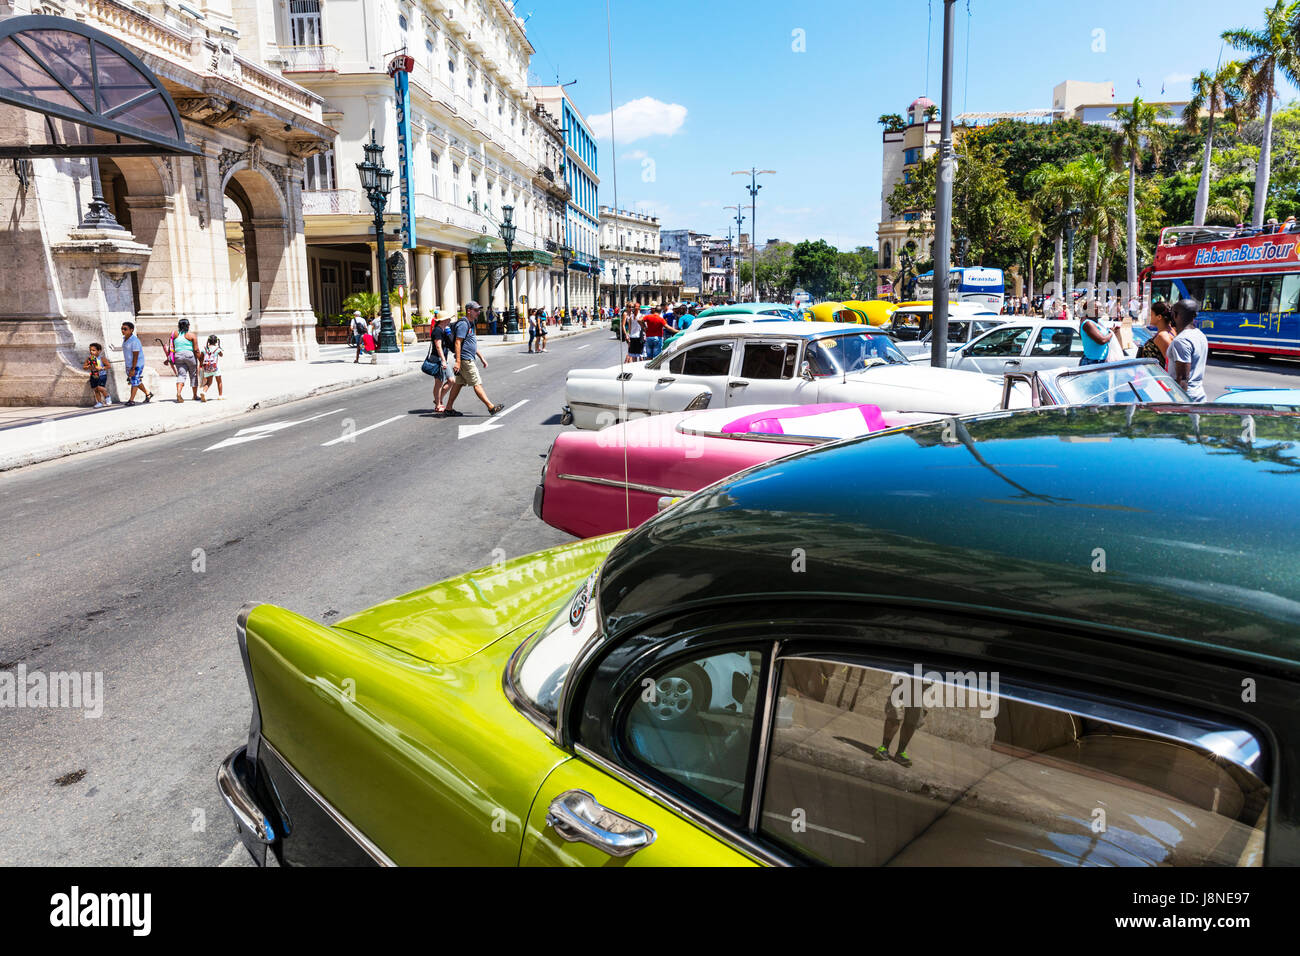 Cuban cars parked in Havana Cuba, Cuba classic cars, American classic cars cuba, cuba, havana, car, cars, vintage cars, Stock Photo